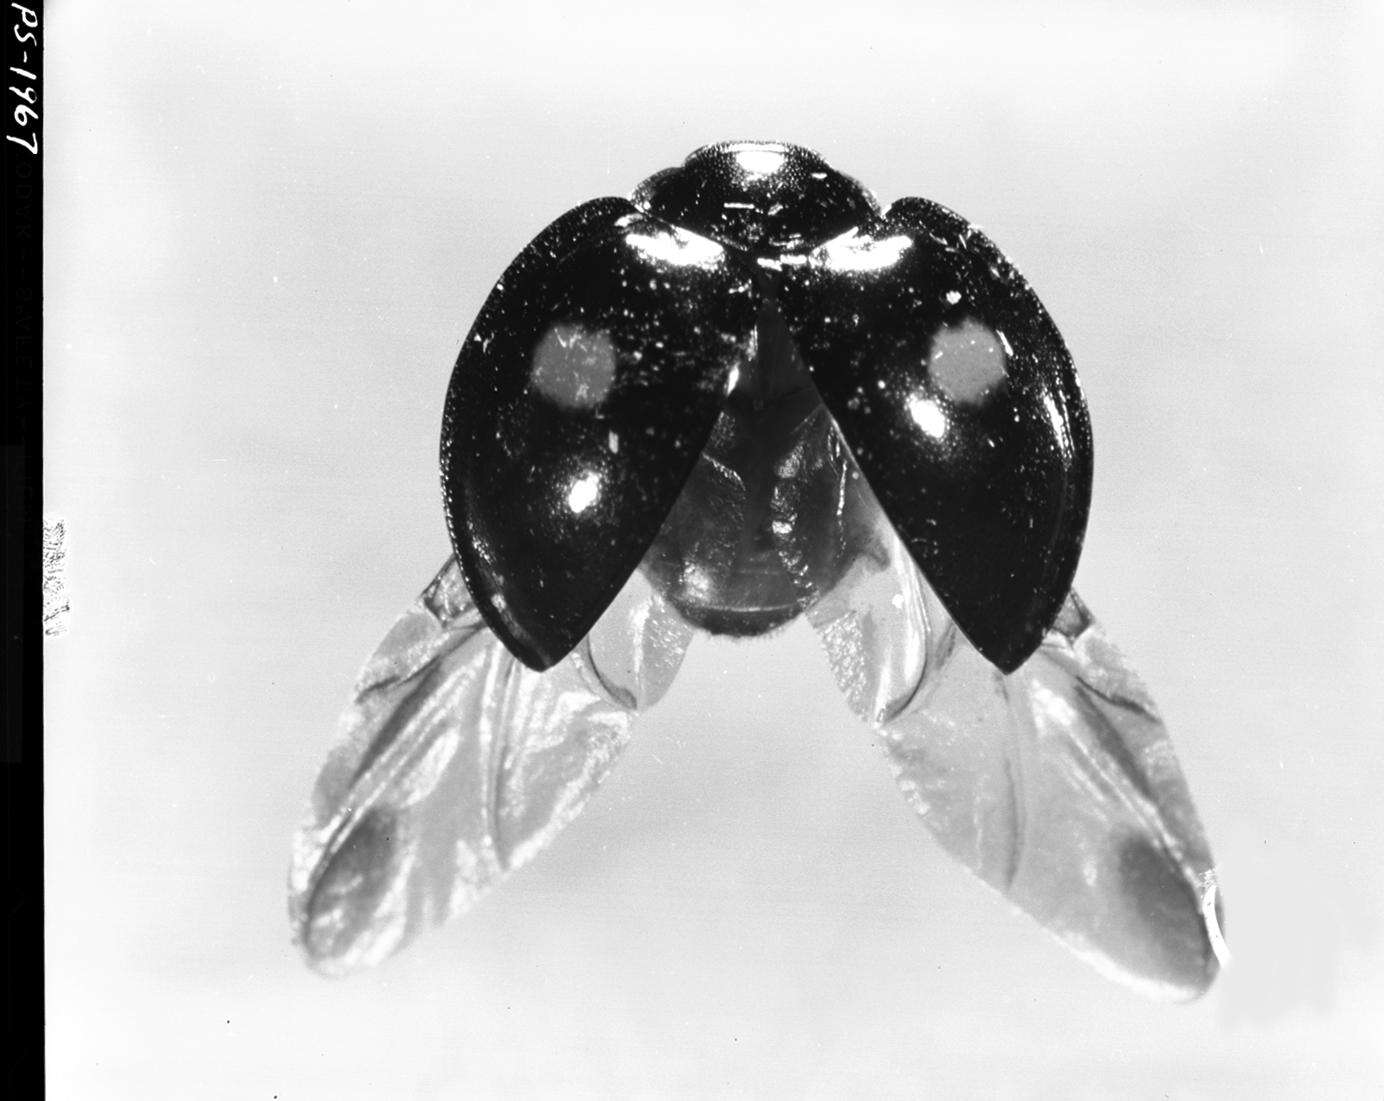 Image of Twice-stabbed Lady Beetles